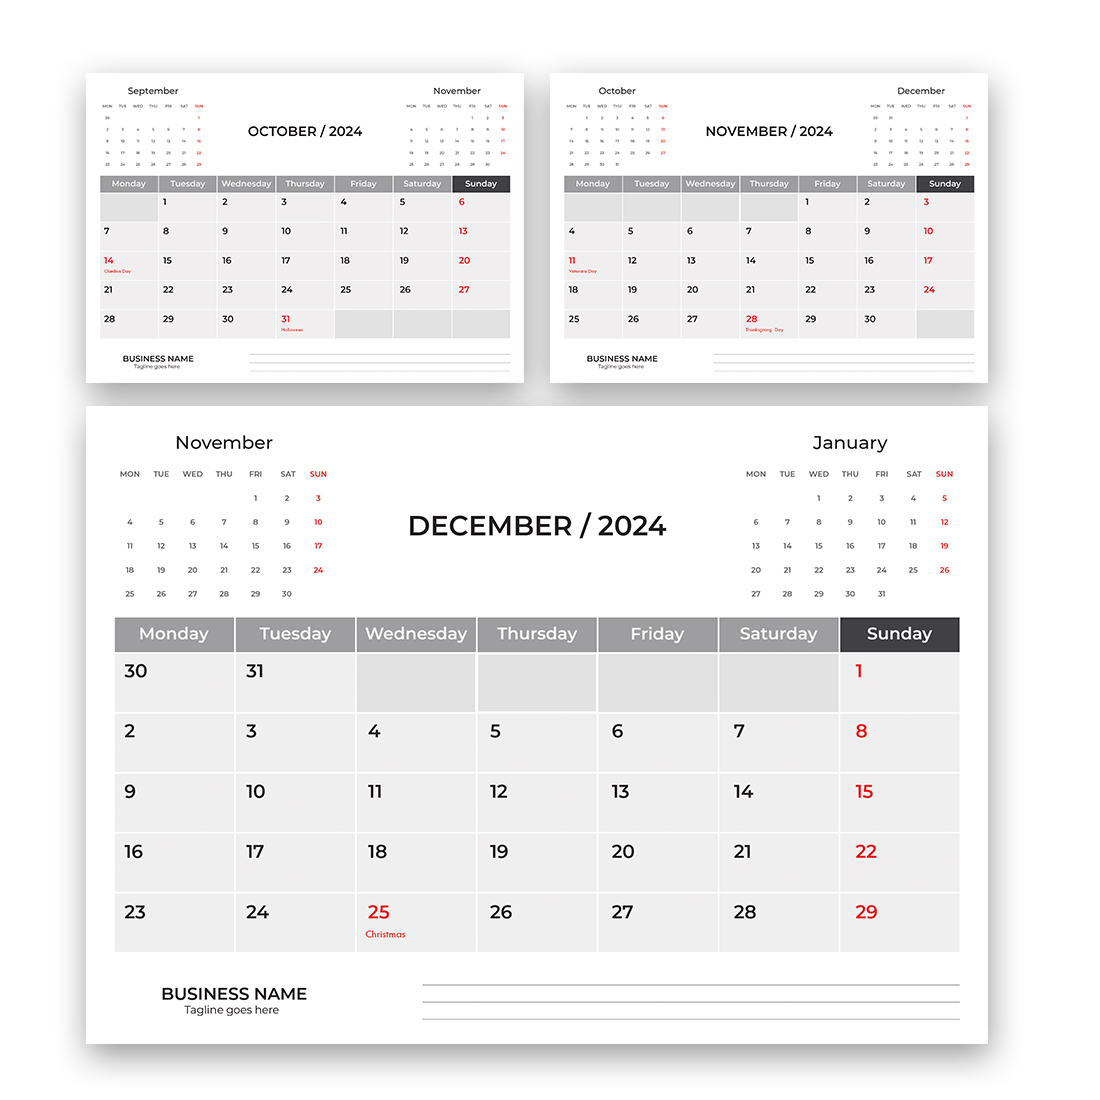 Desk Calendar 2024 preview image.